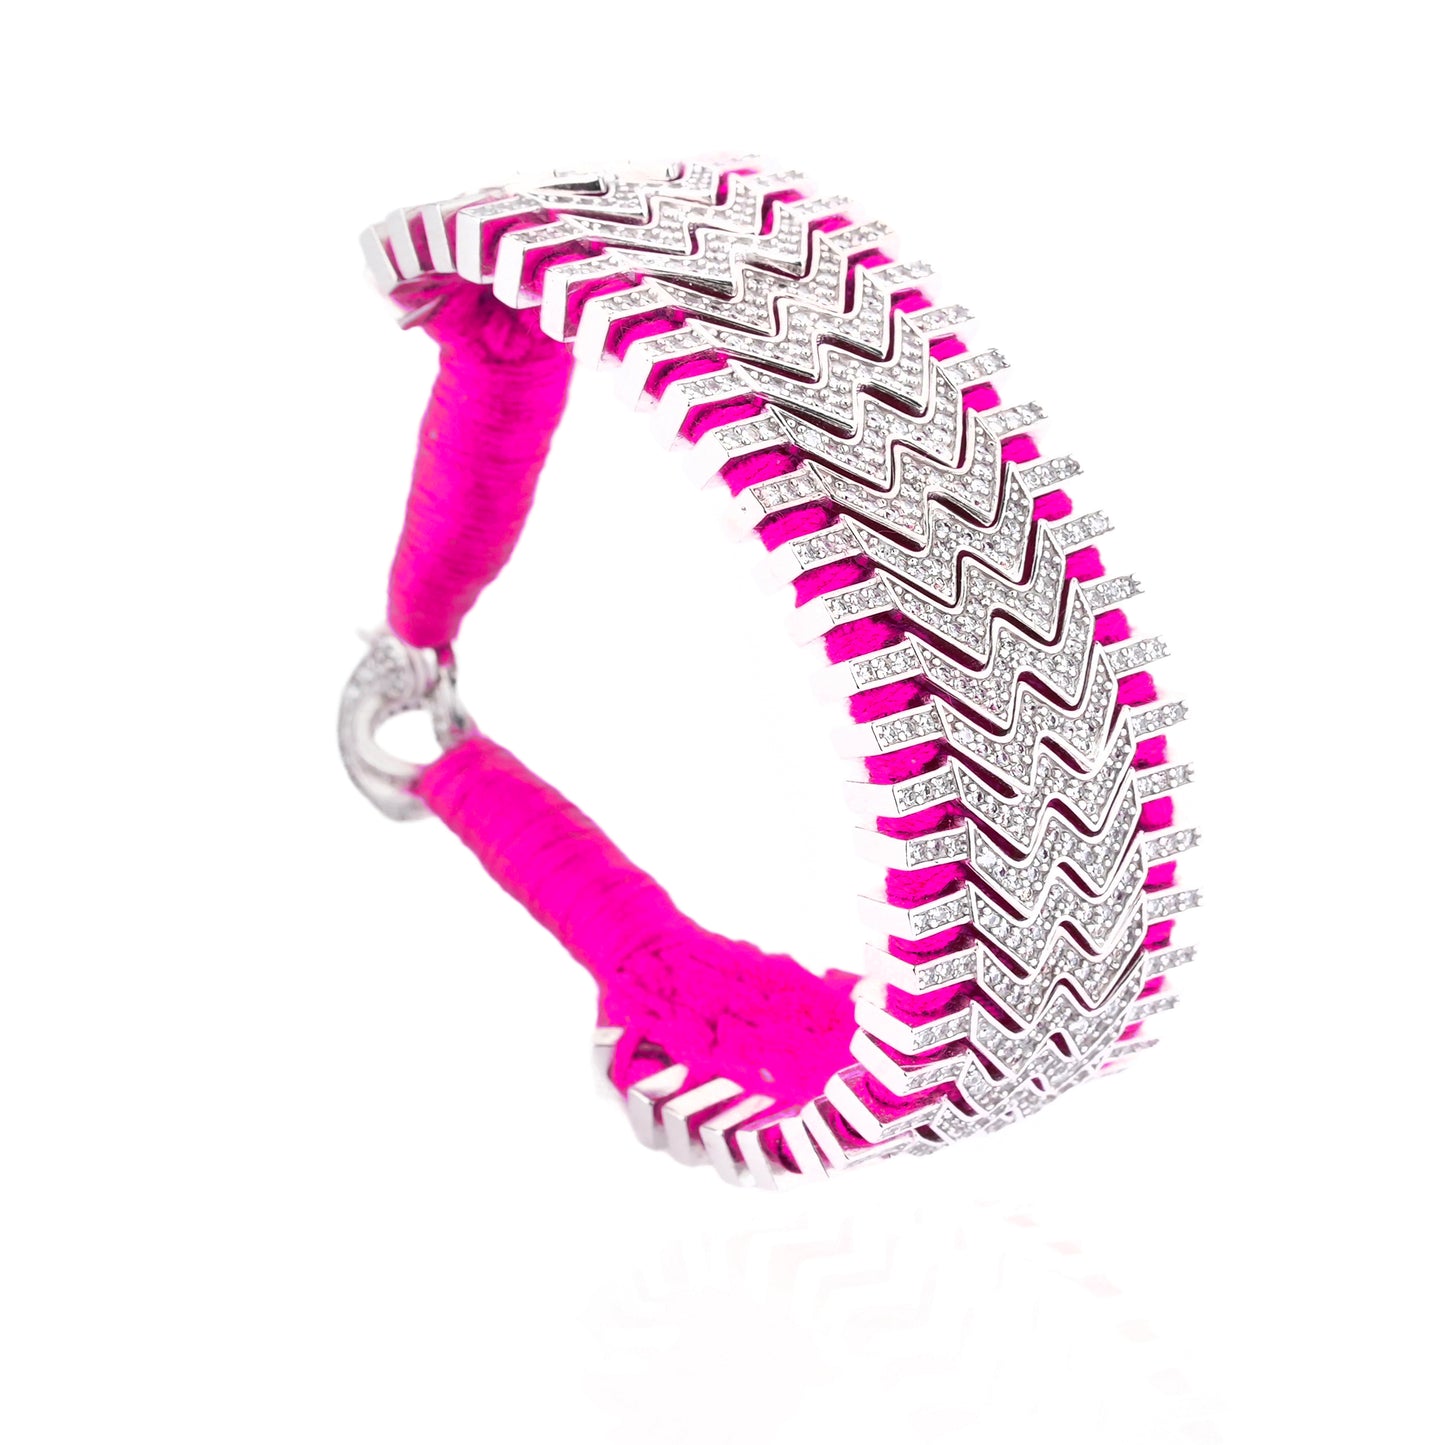 Trancoso Neon pink bracelet in 925 silver and diamonds